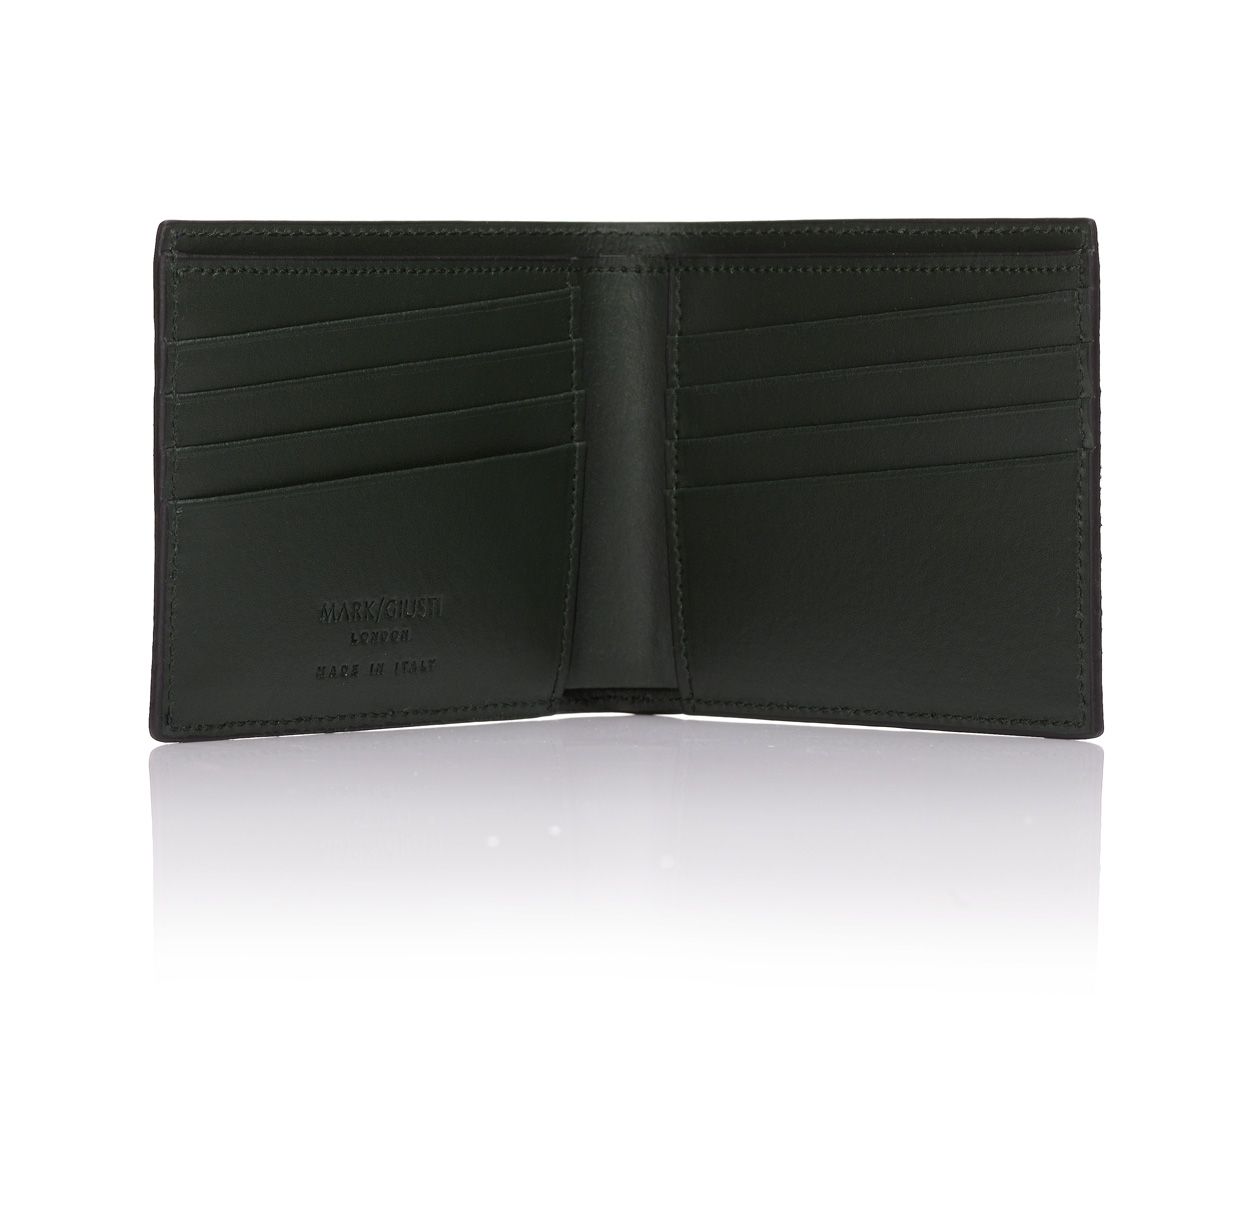 Wimbledon Blue Leather Luxury Wallet I MARK/GIUSTI